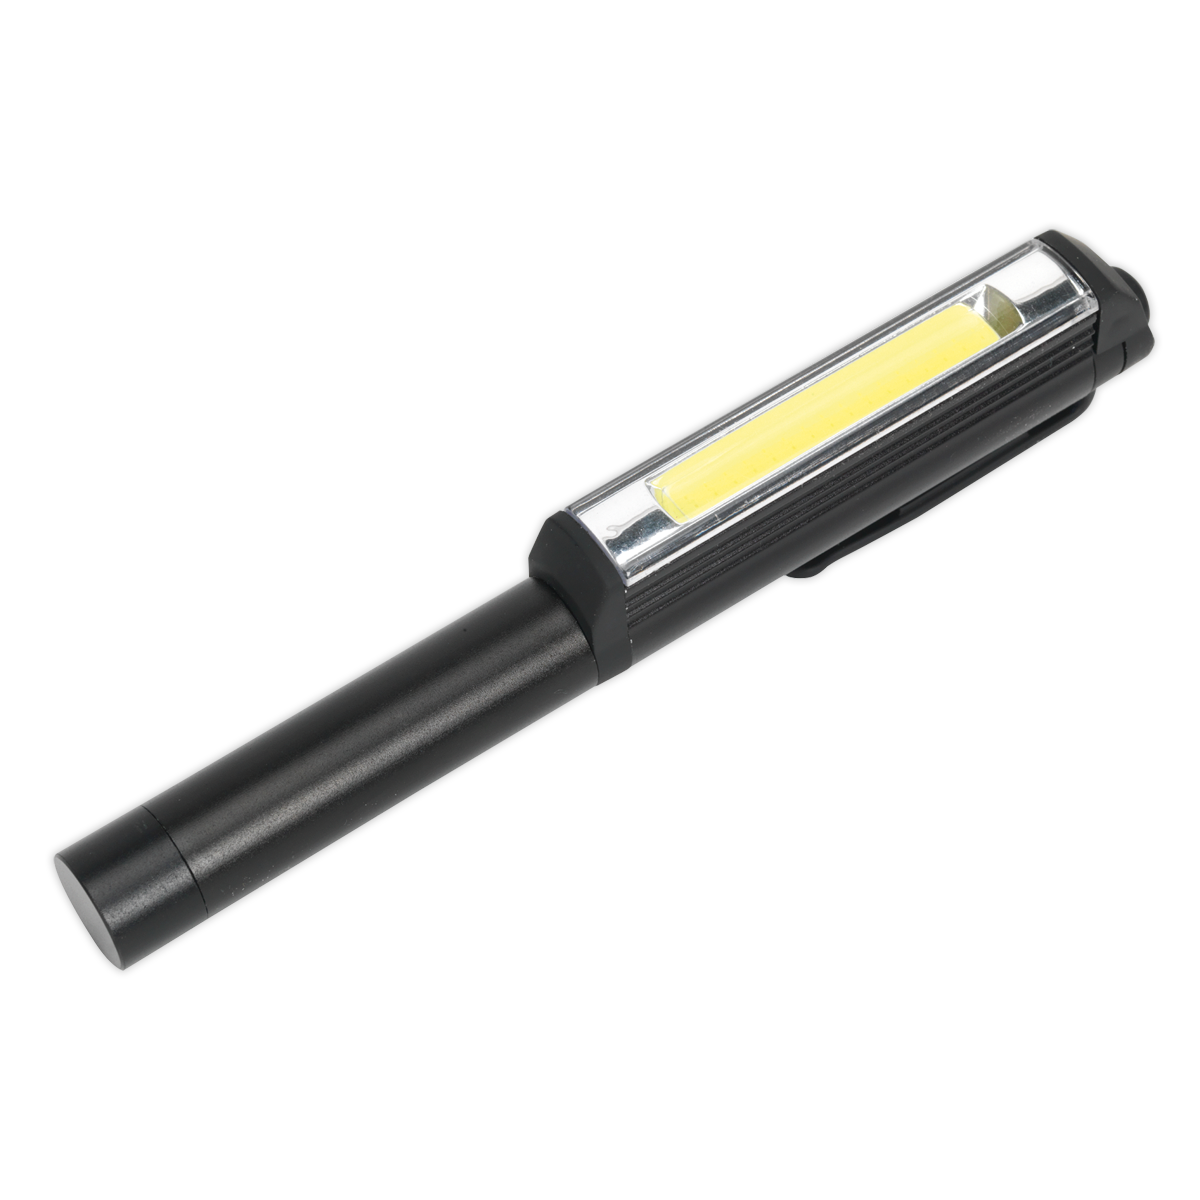 Sealey Penlight 3W COB LED 3 x AAA Cell